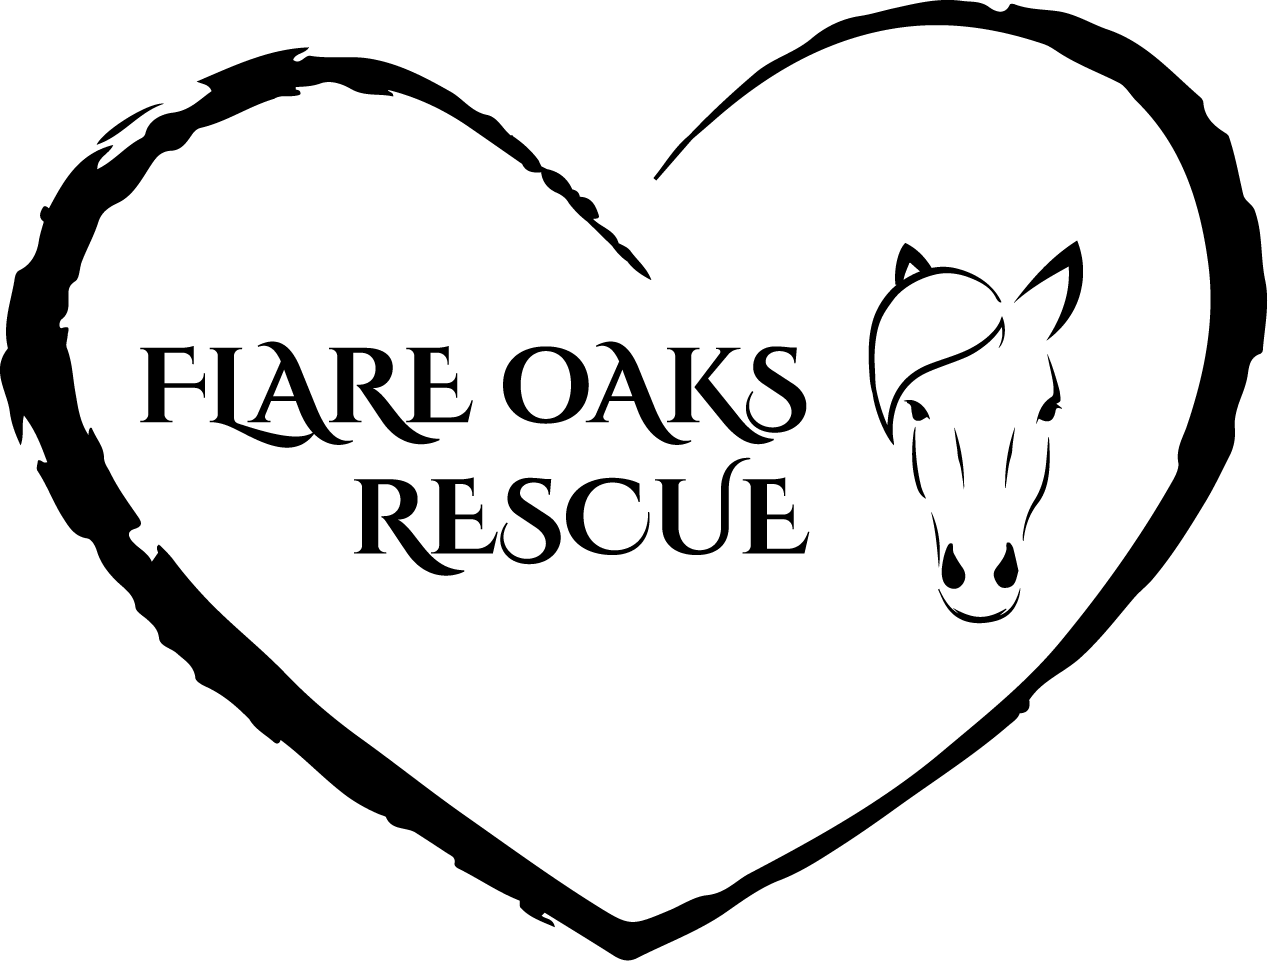 Flare Oaks Rescue logo